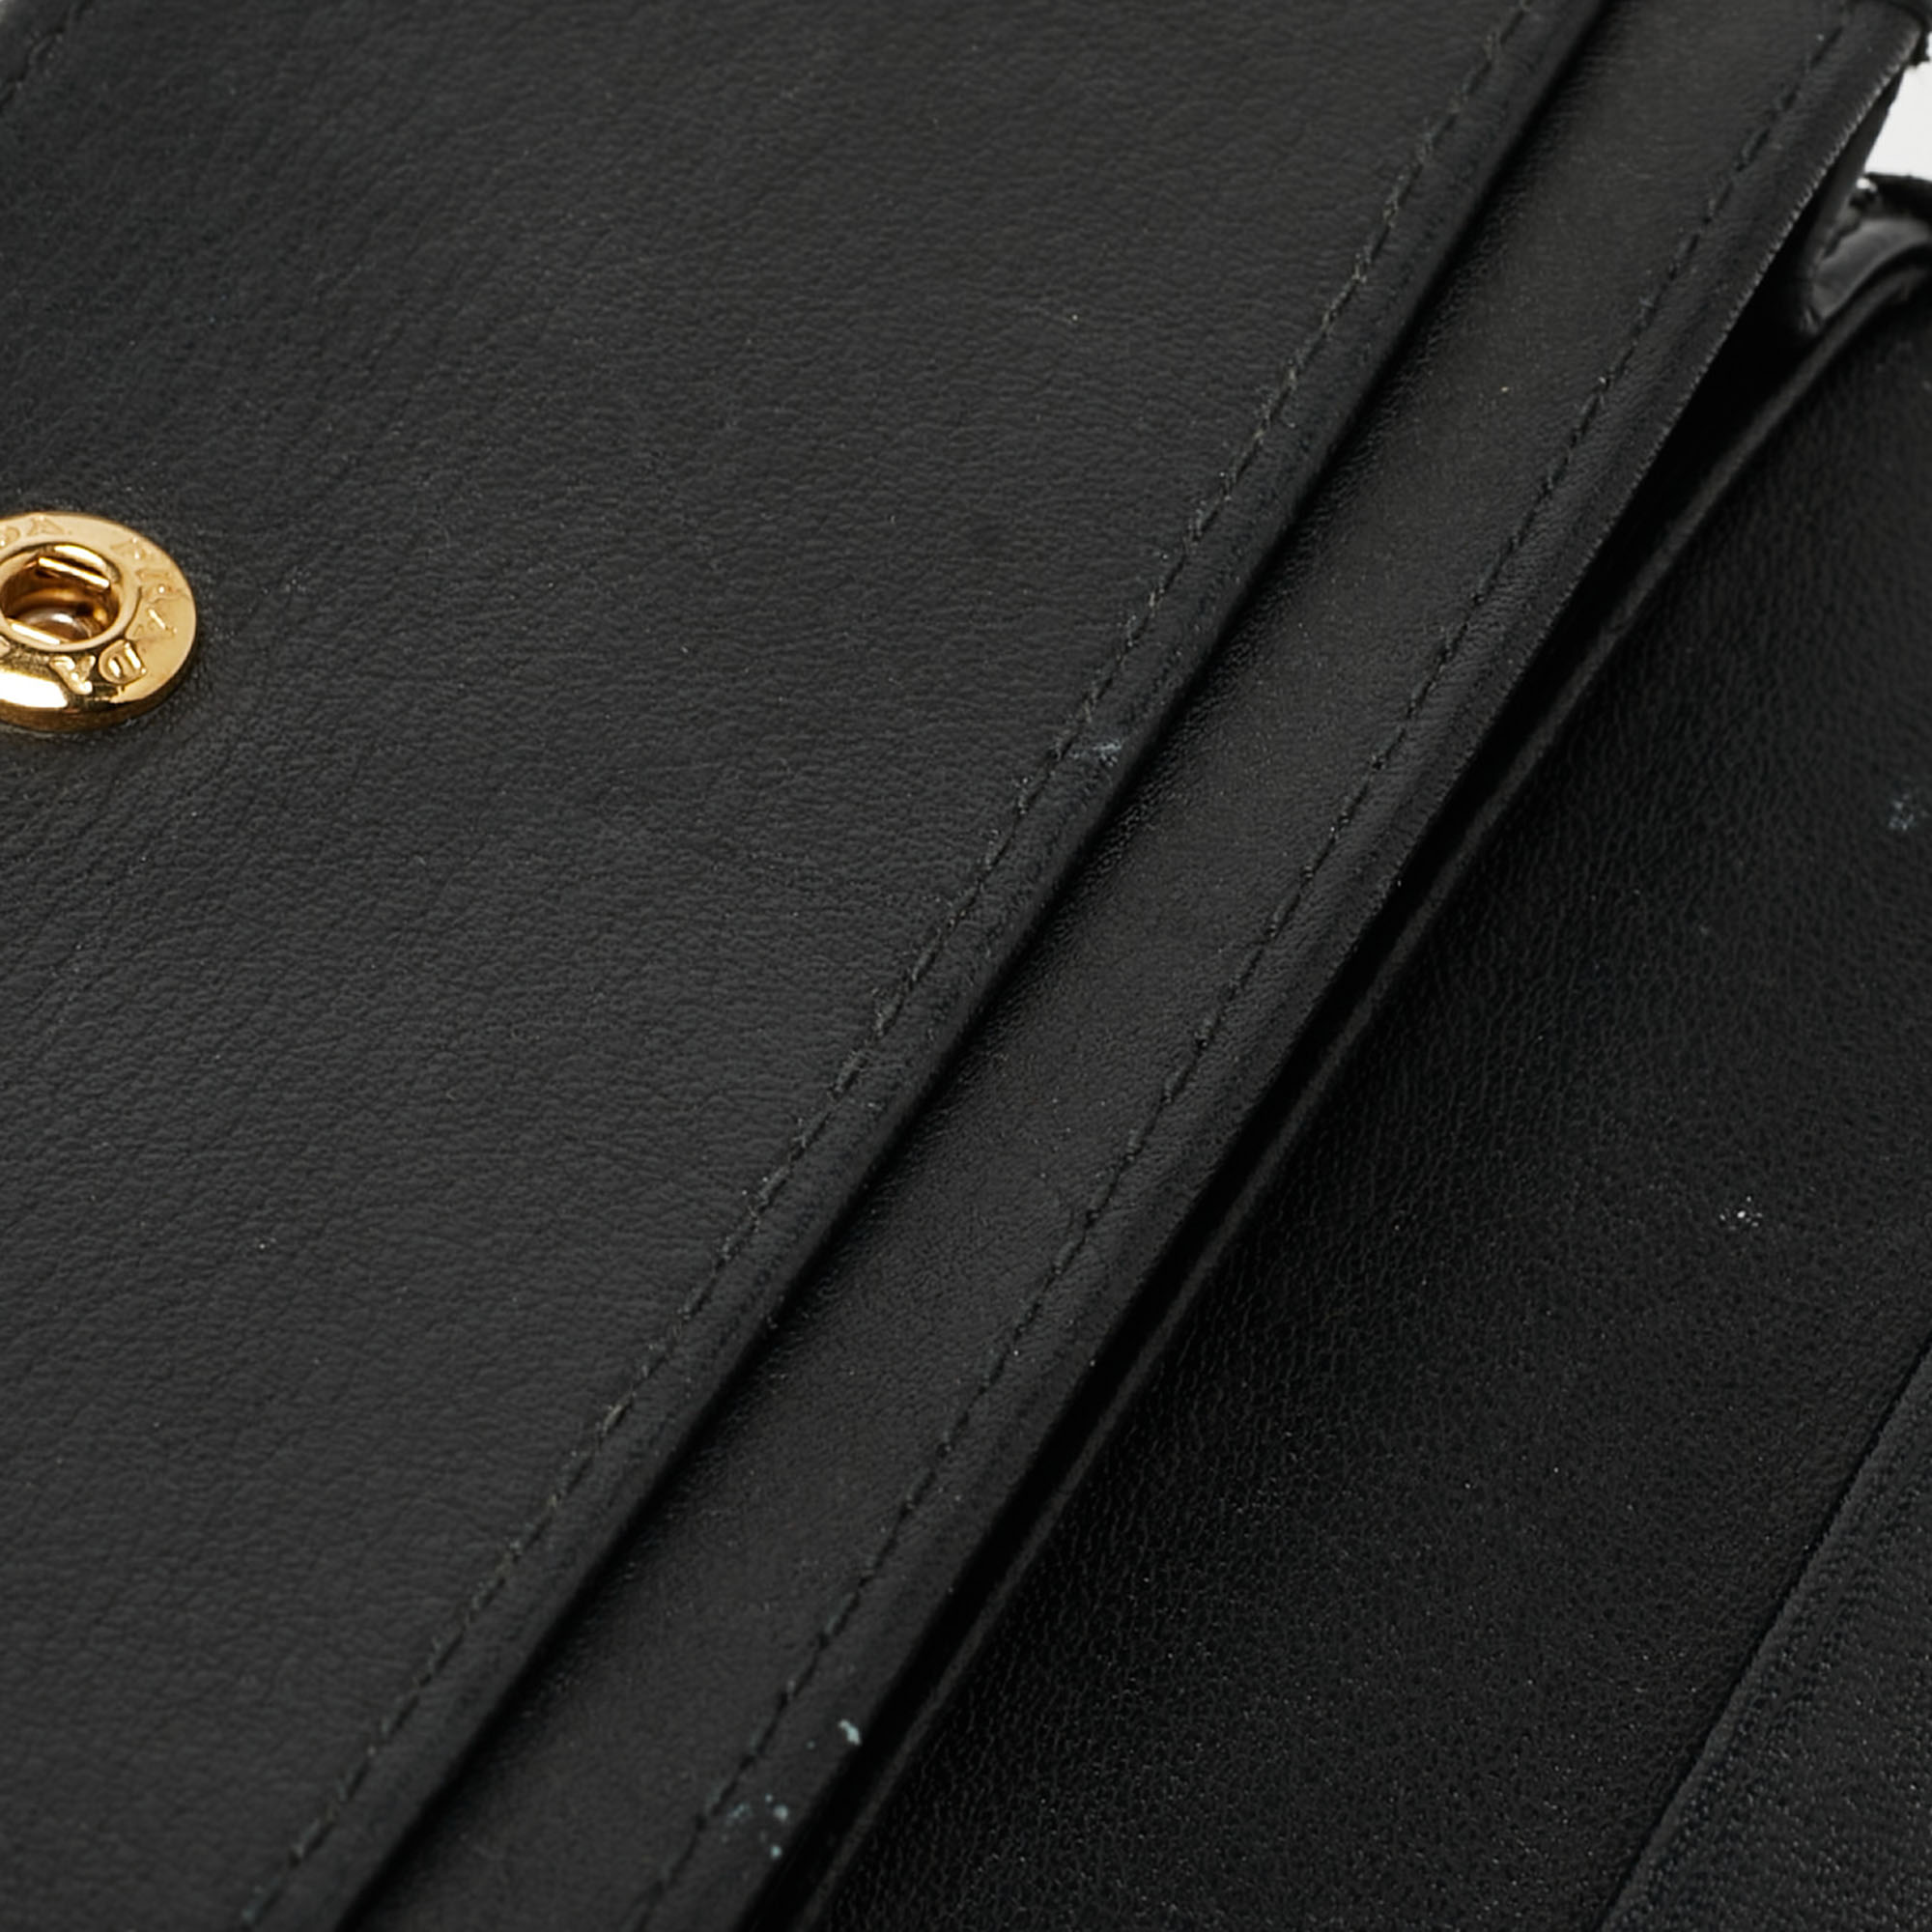 Prada Black Saffiano Leather Business Card Case